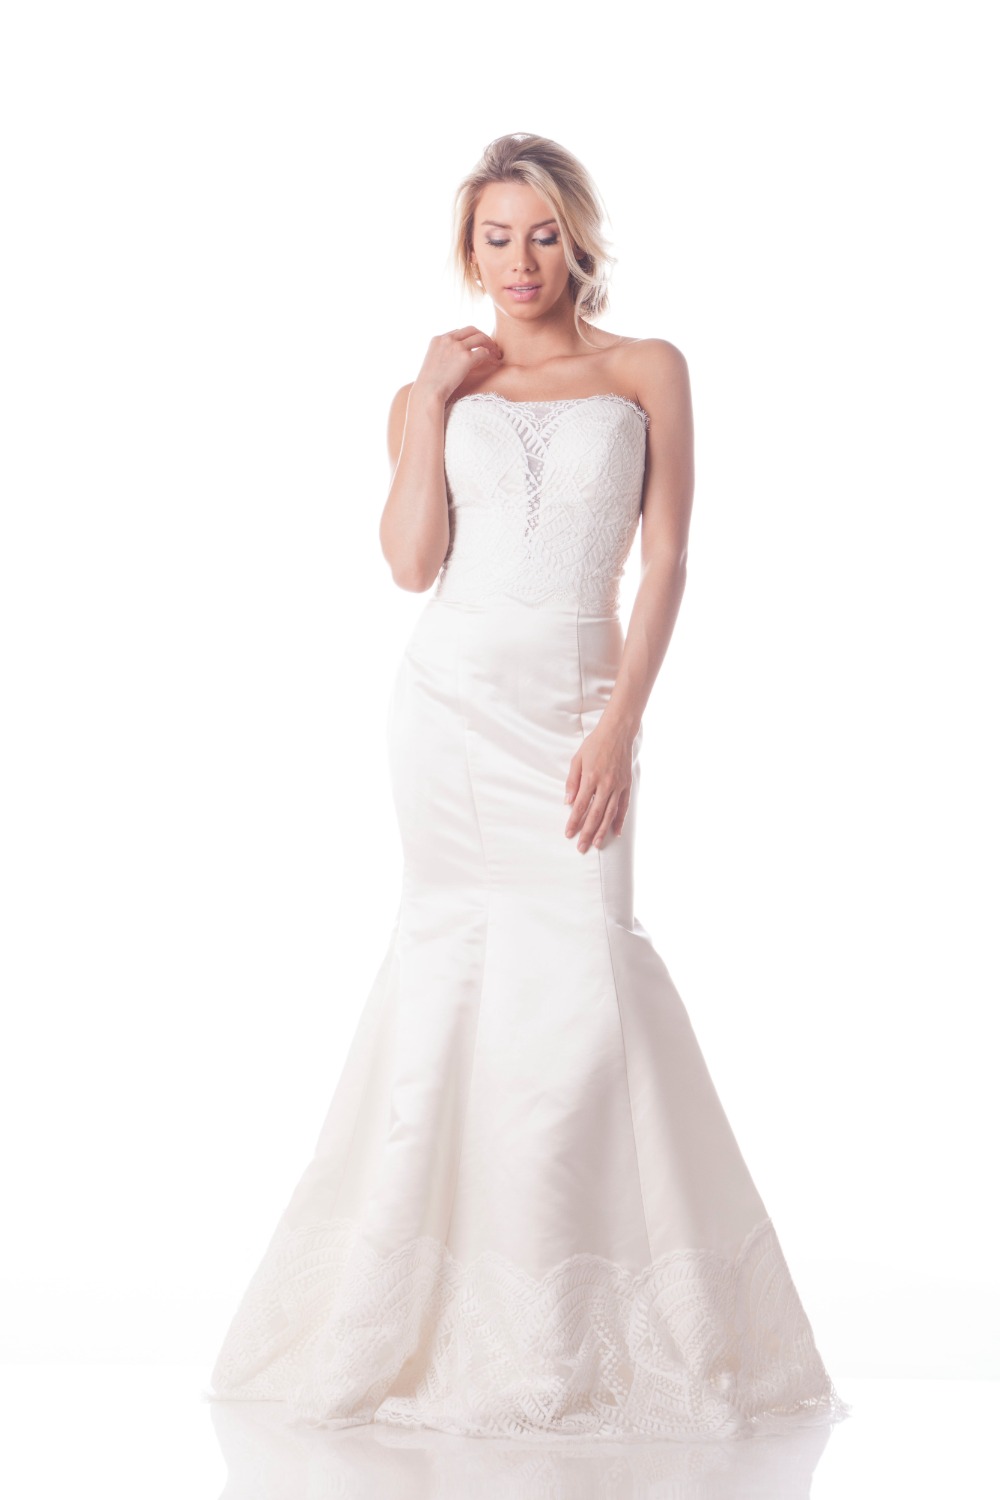 customize your own Olia Zavozina wedding gown